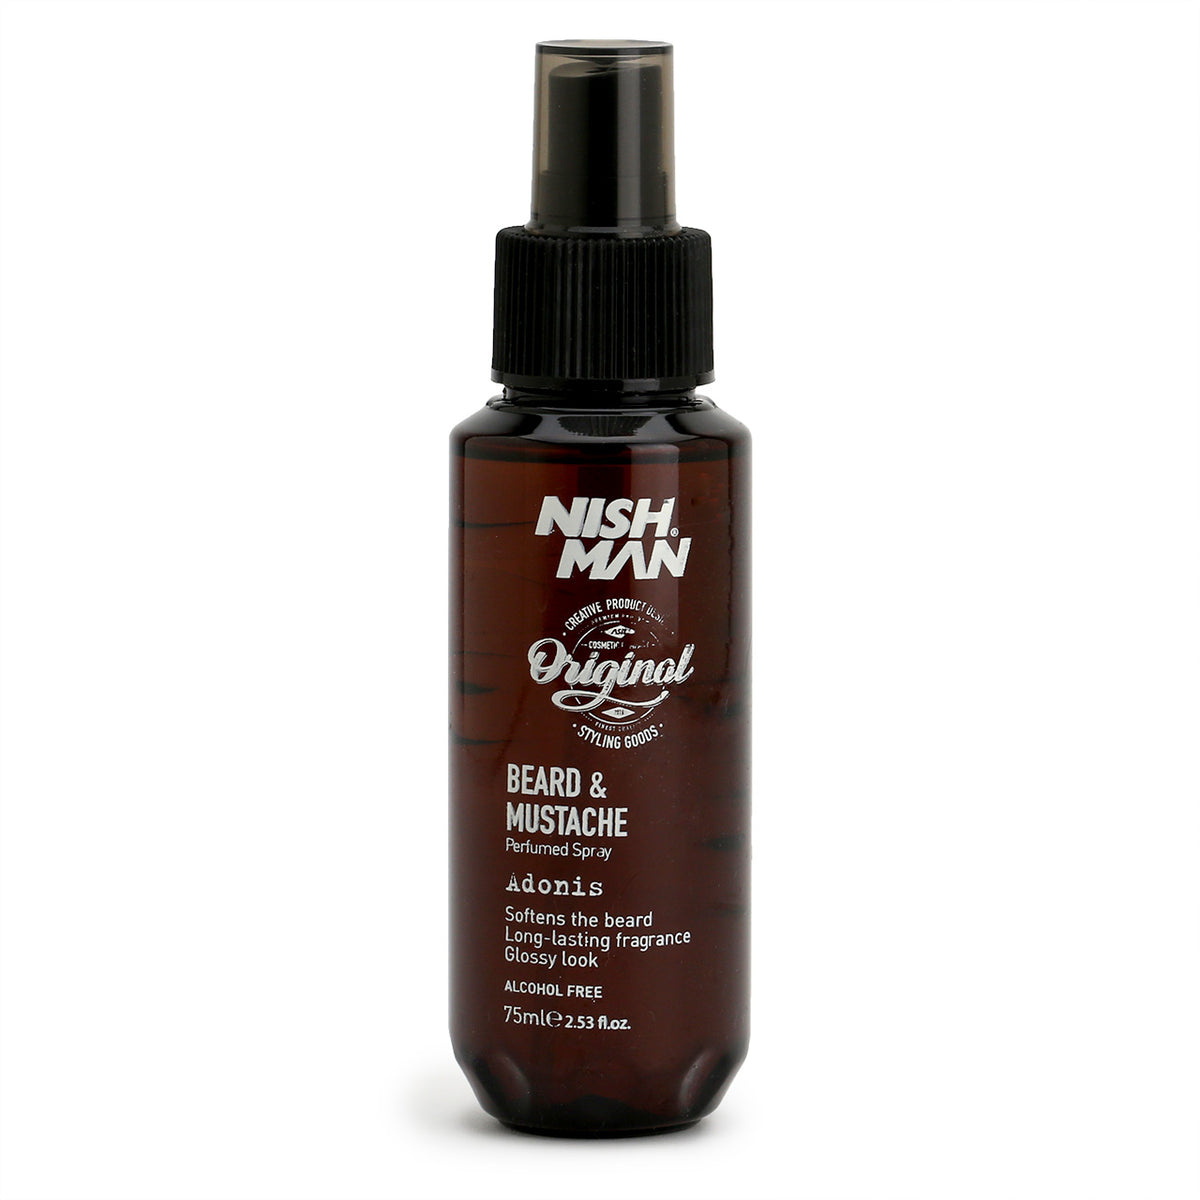 Nishman Perfumed Beard Spray Adonis scent in an amber spray bottle